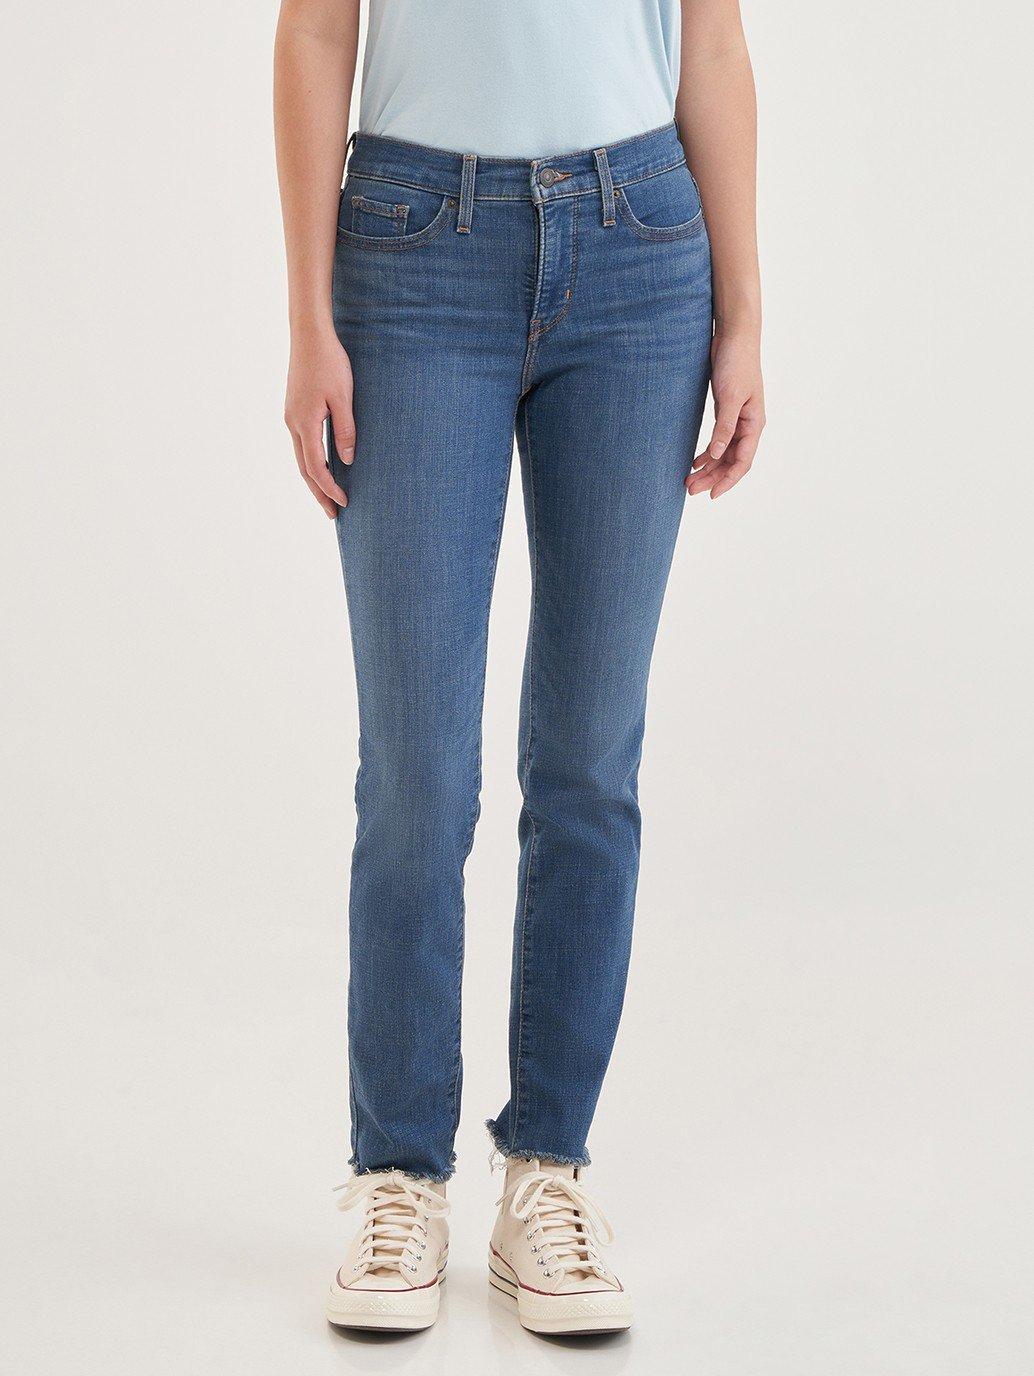 Buy Levi's® Women's 312 Shaping Slim Jeans | Levi’s Official Online ...